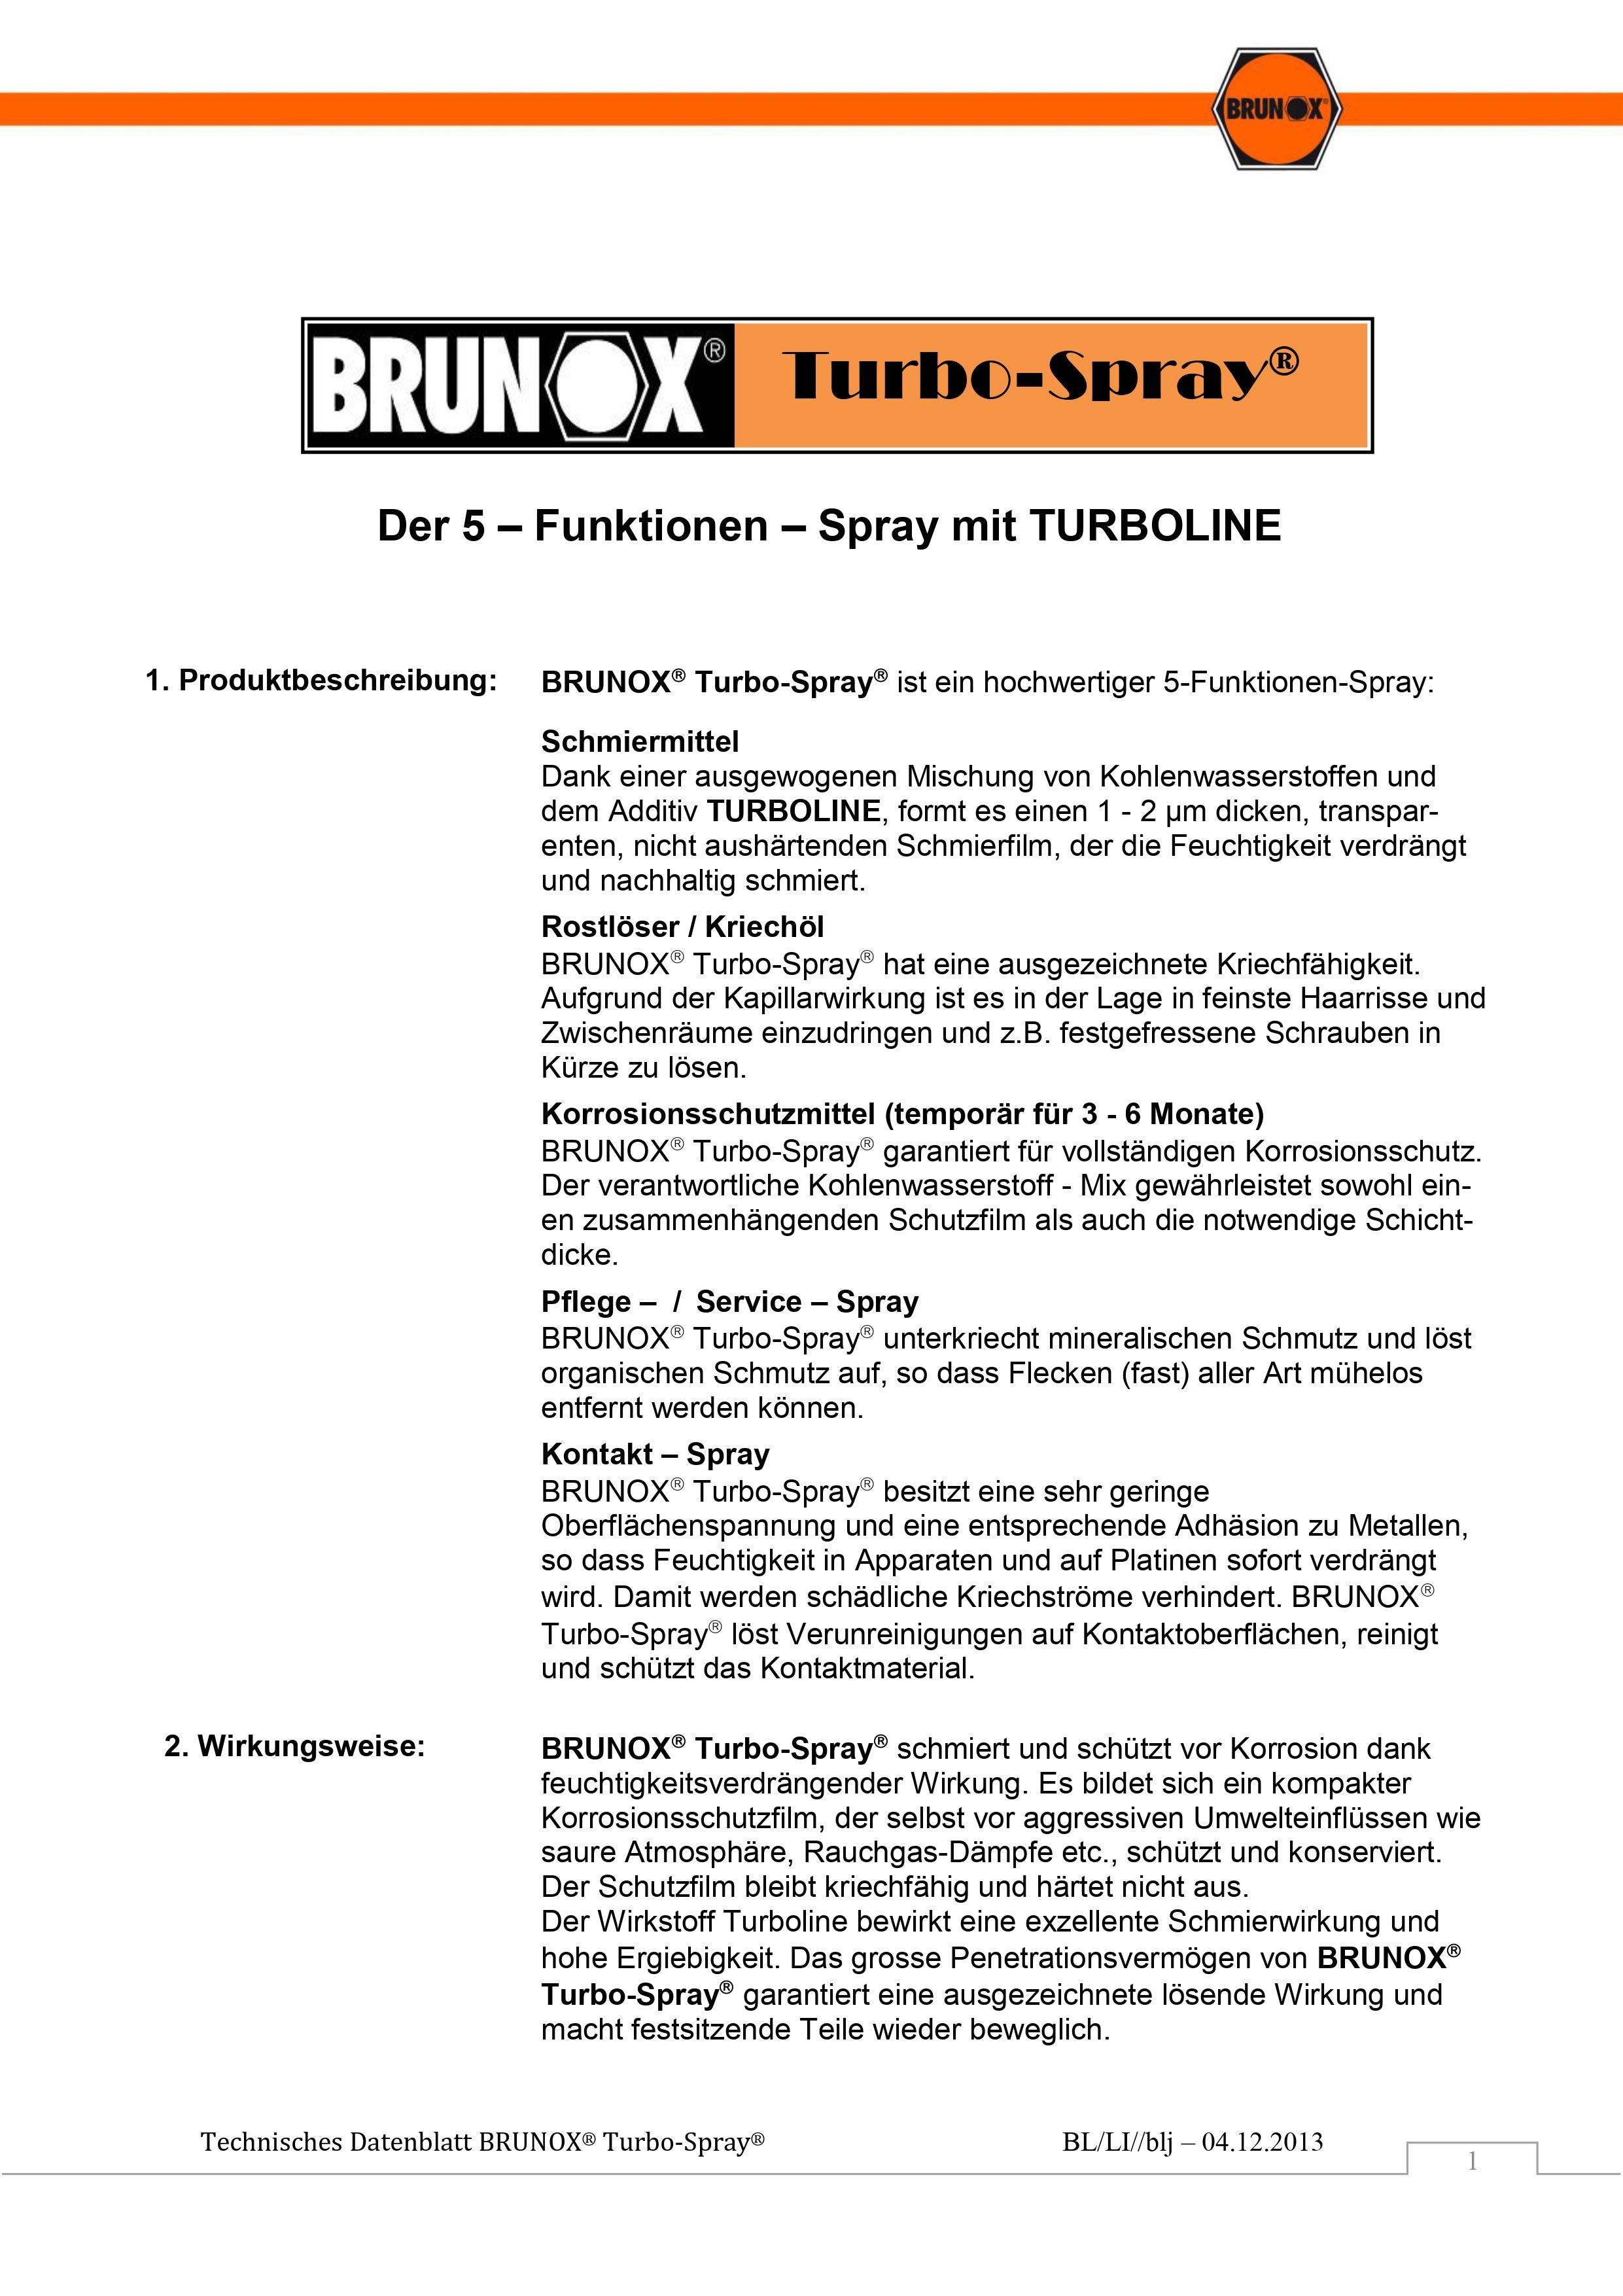 BRUNOX Turbo-Spray 50 ml Multifunktionsöl, Rostlöser, Kriechöl Schmiermittel